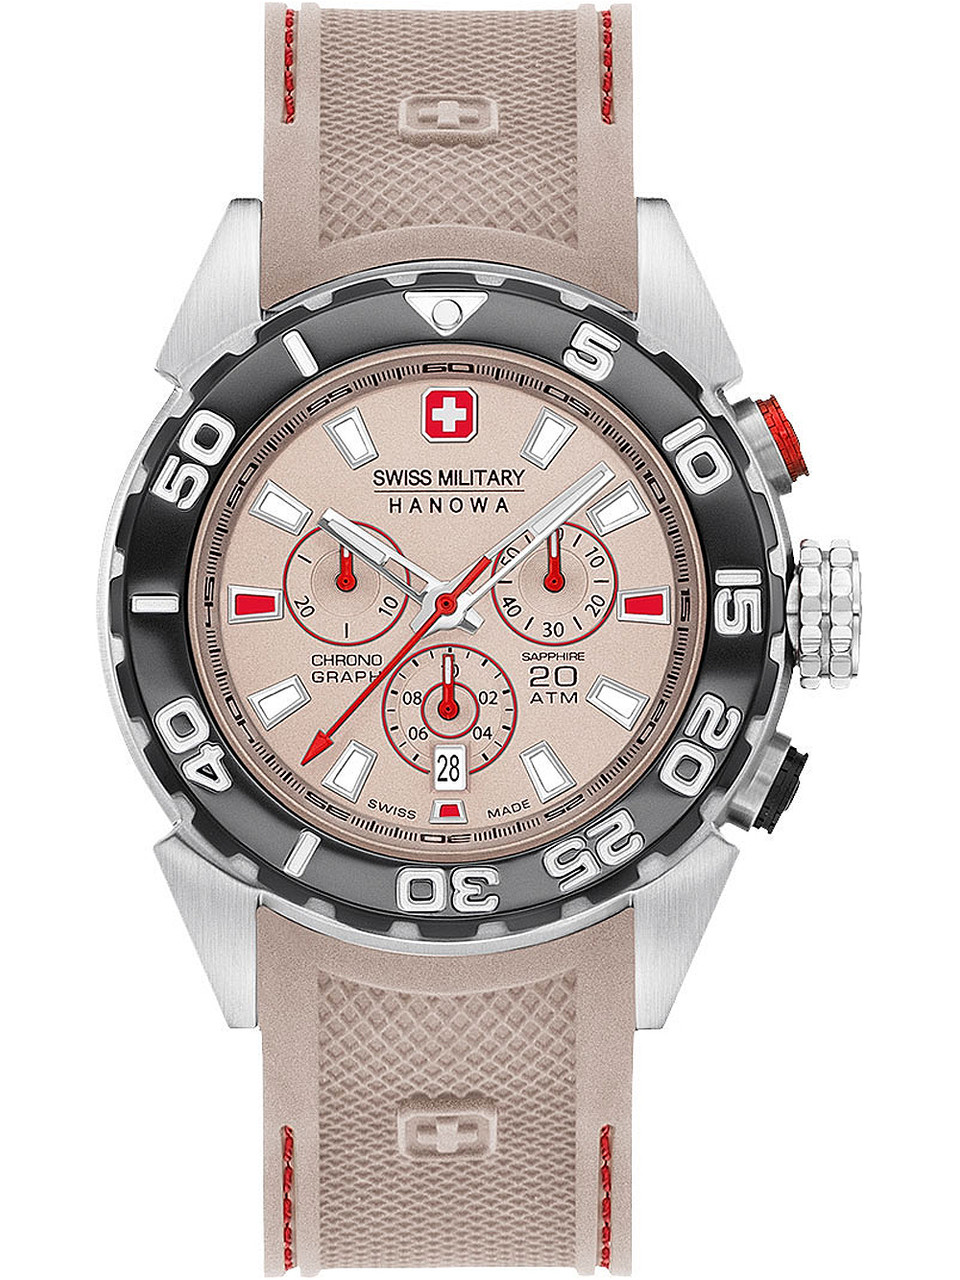 Swiss Military Hanowa 06-4324-04-014 | chrono Scuba - Diver Watches Genuine owlica 20ATM 45mm